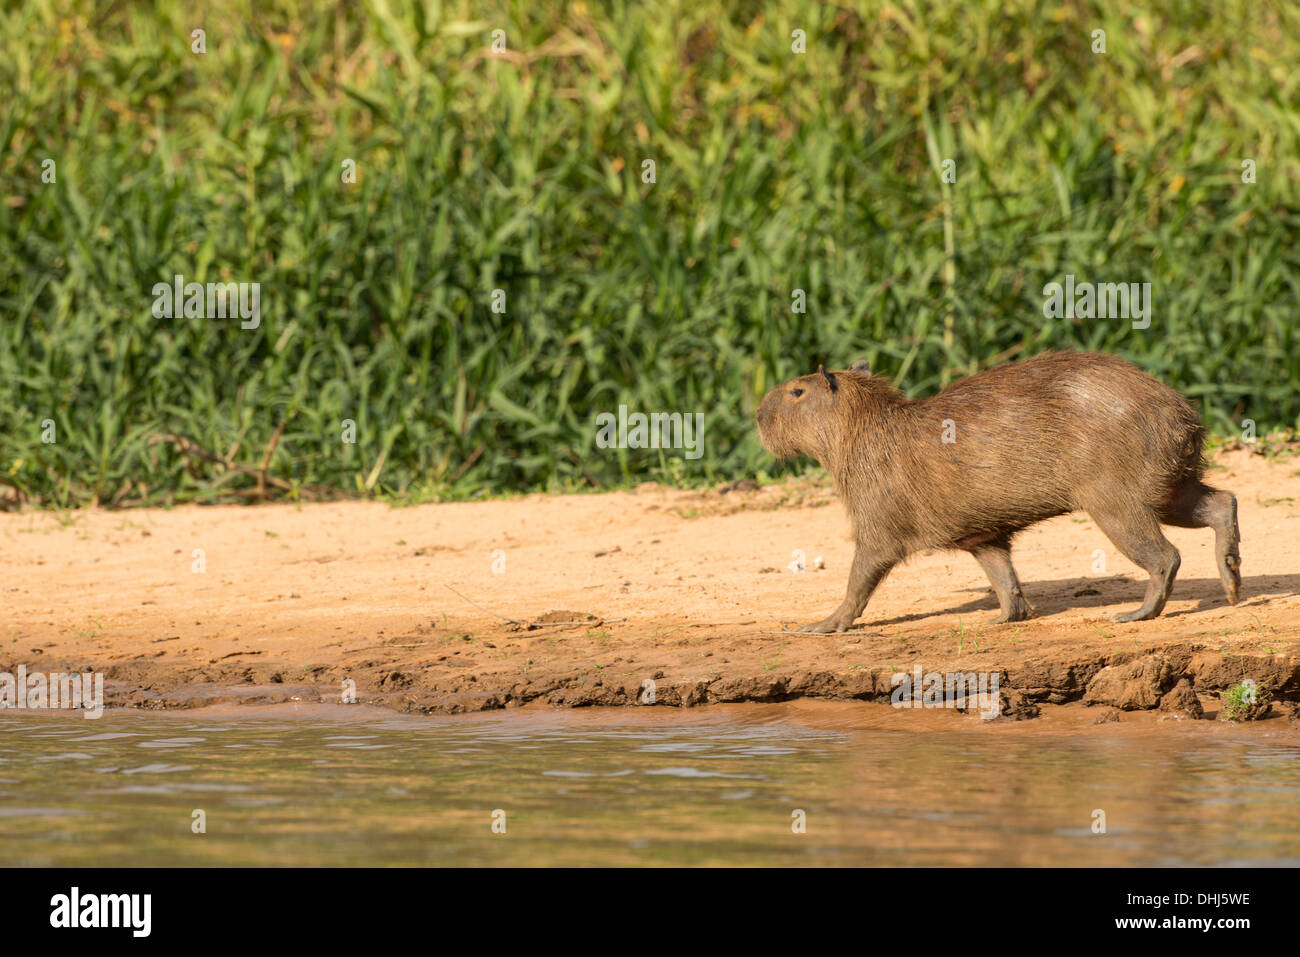 Stock photo of a capybara walking along the beach, Pantanal, Brazil. Stock Photo